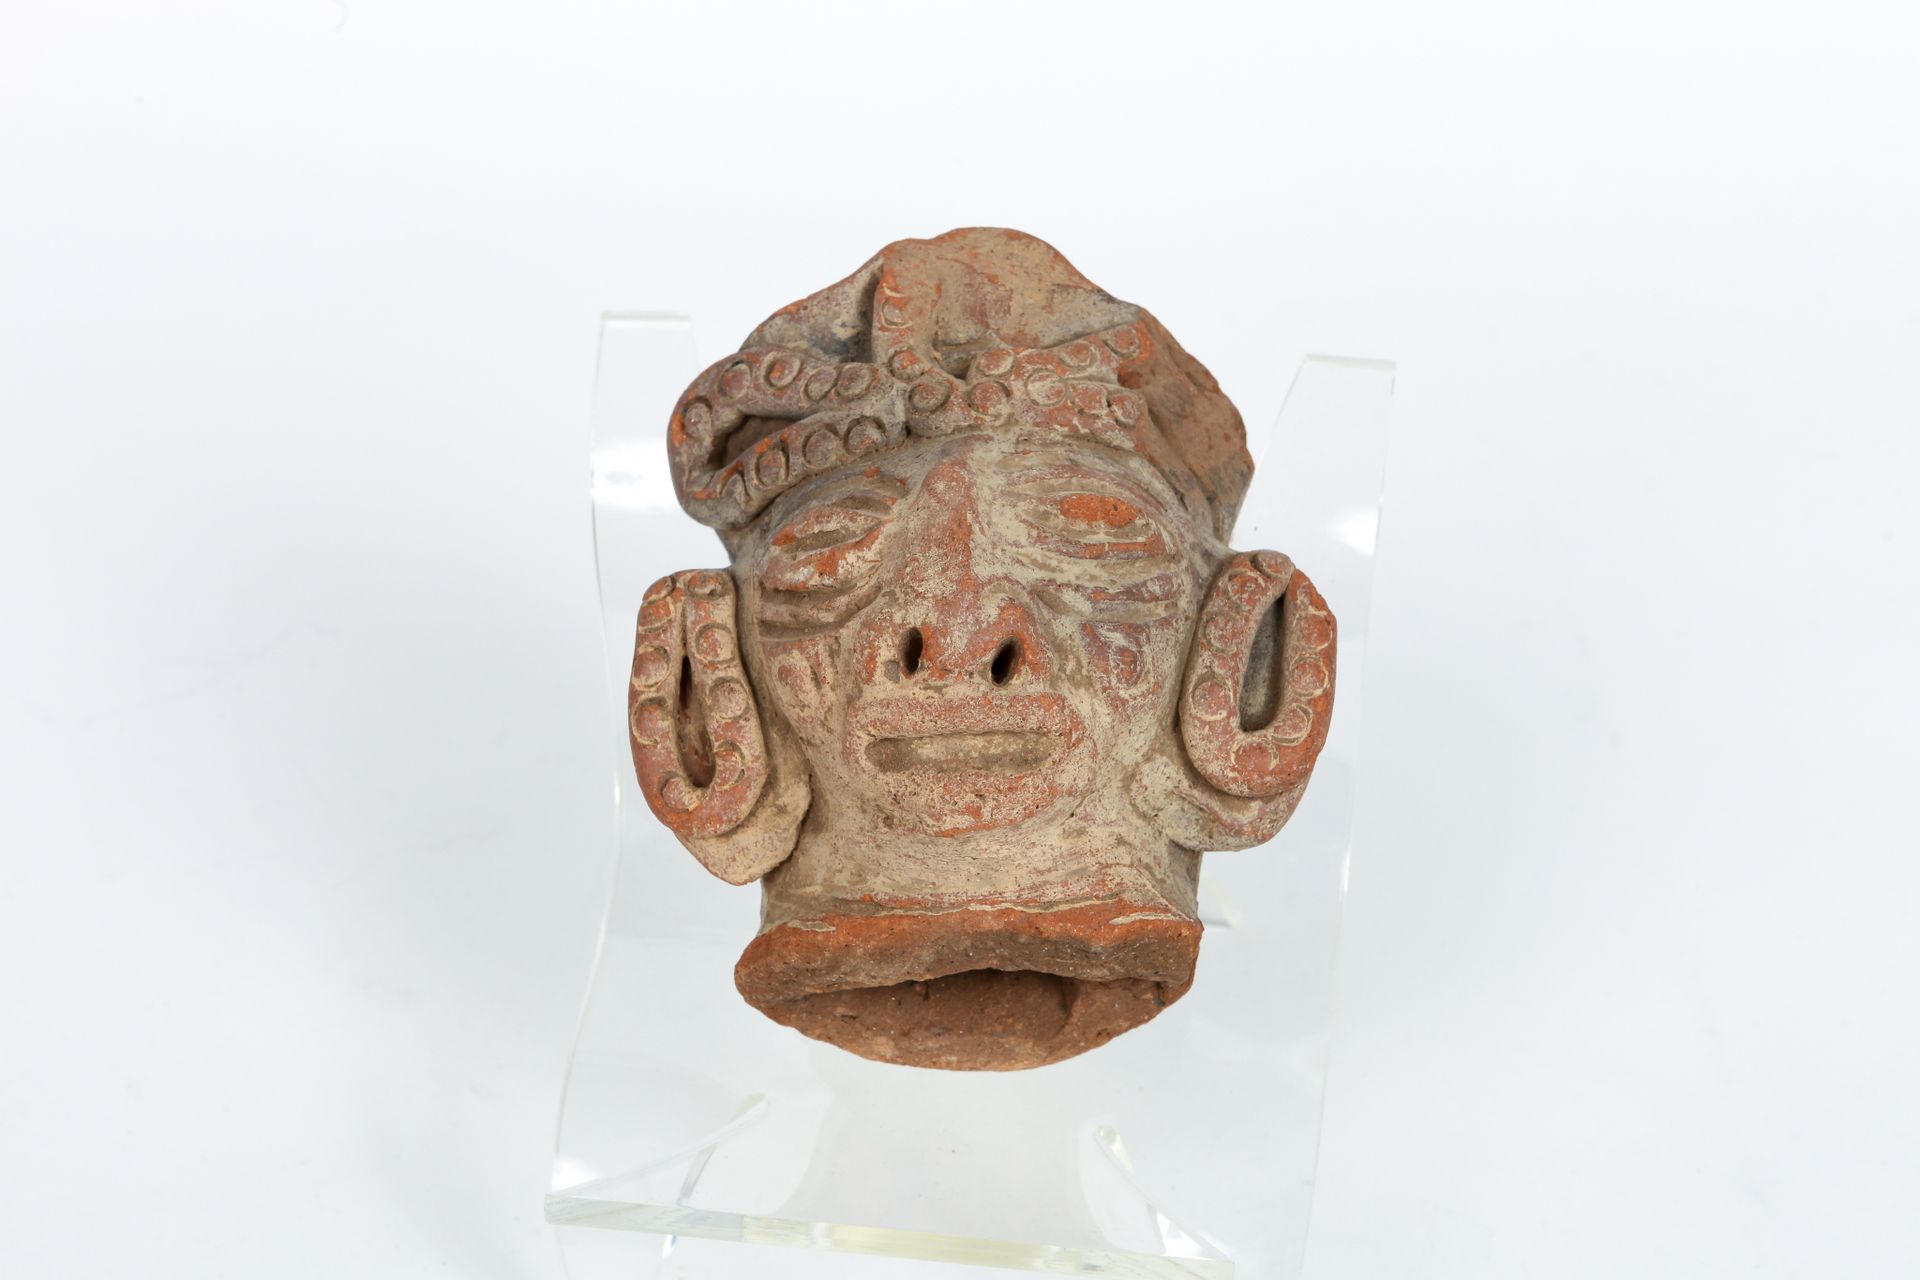 Tête de divinité 膨胀的耳垂。

米色-橙色的陶土。 

墨西哥南部，古典时期，公元600-900年。

11厘米